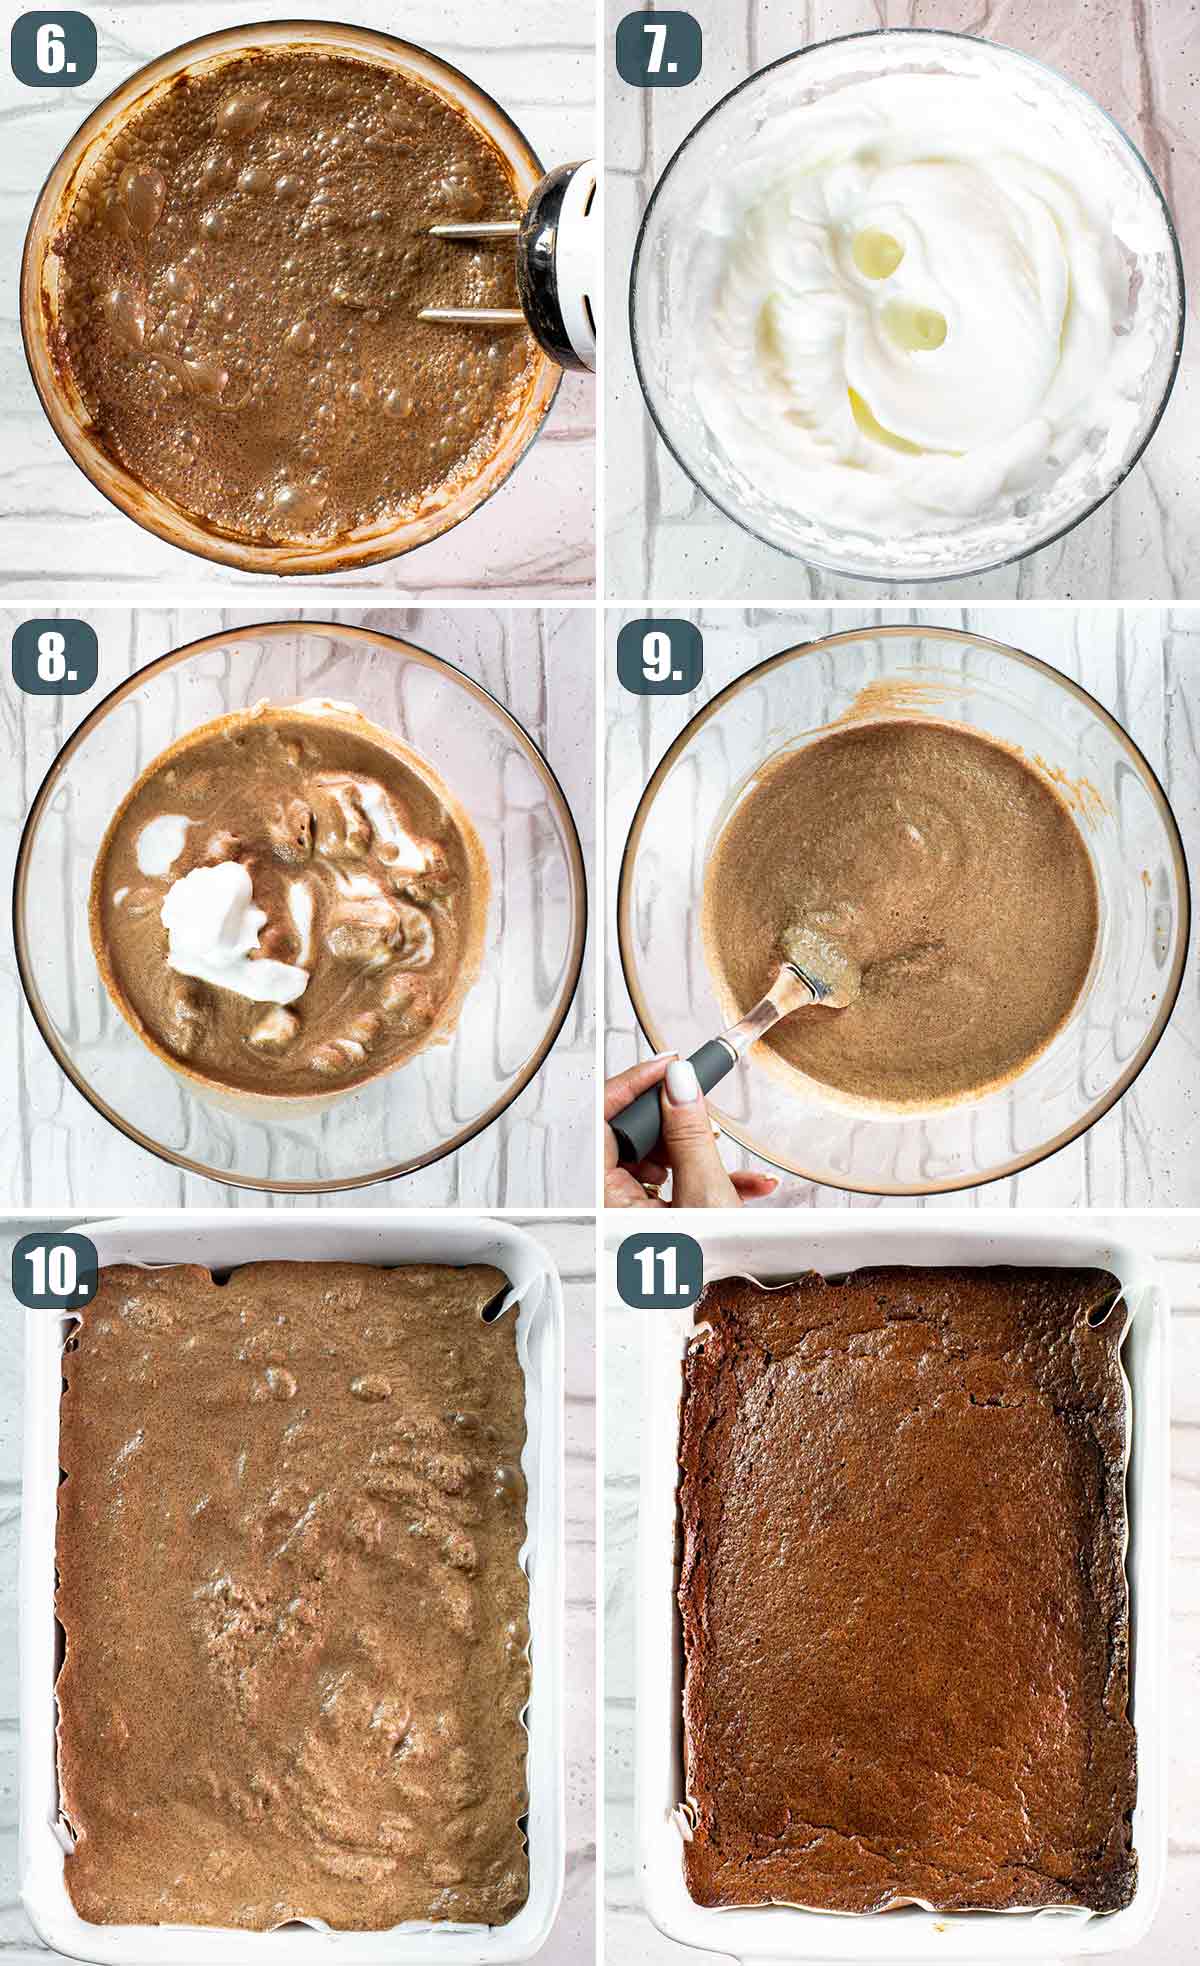 process shots showing how to make chocolate magic cake.